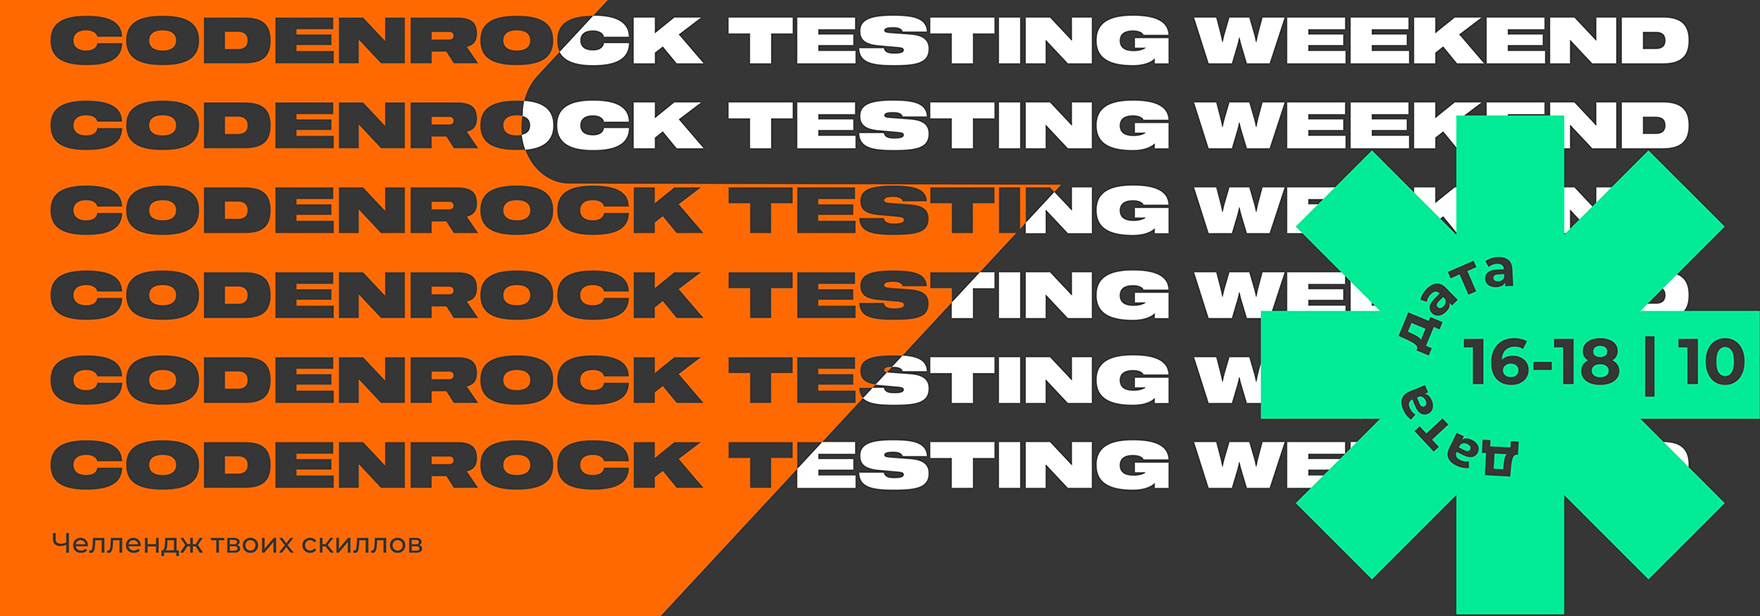 Обложка курса Конкурс Codenrock Testing Weekend